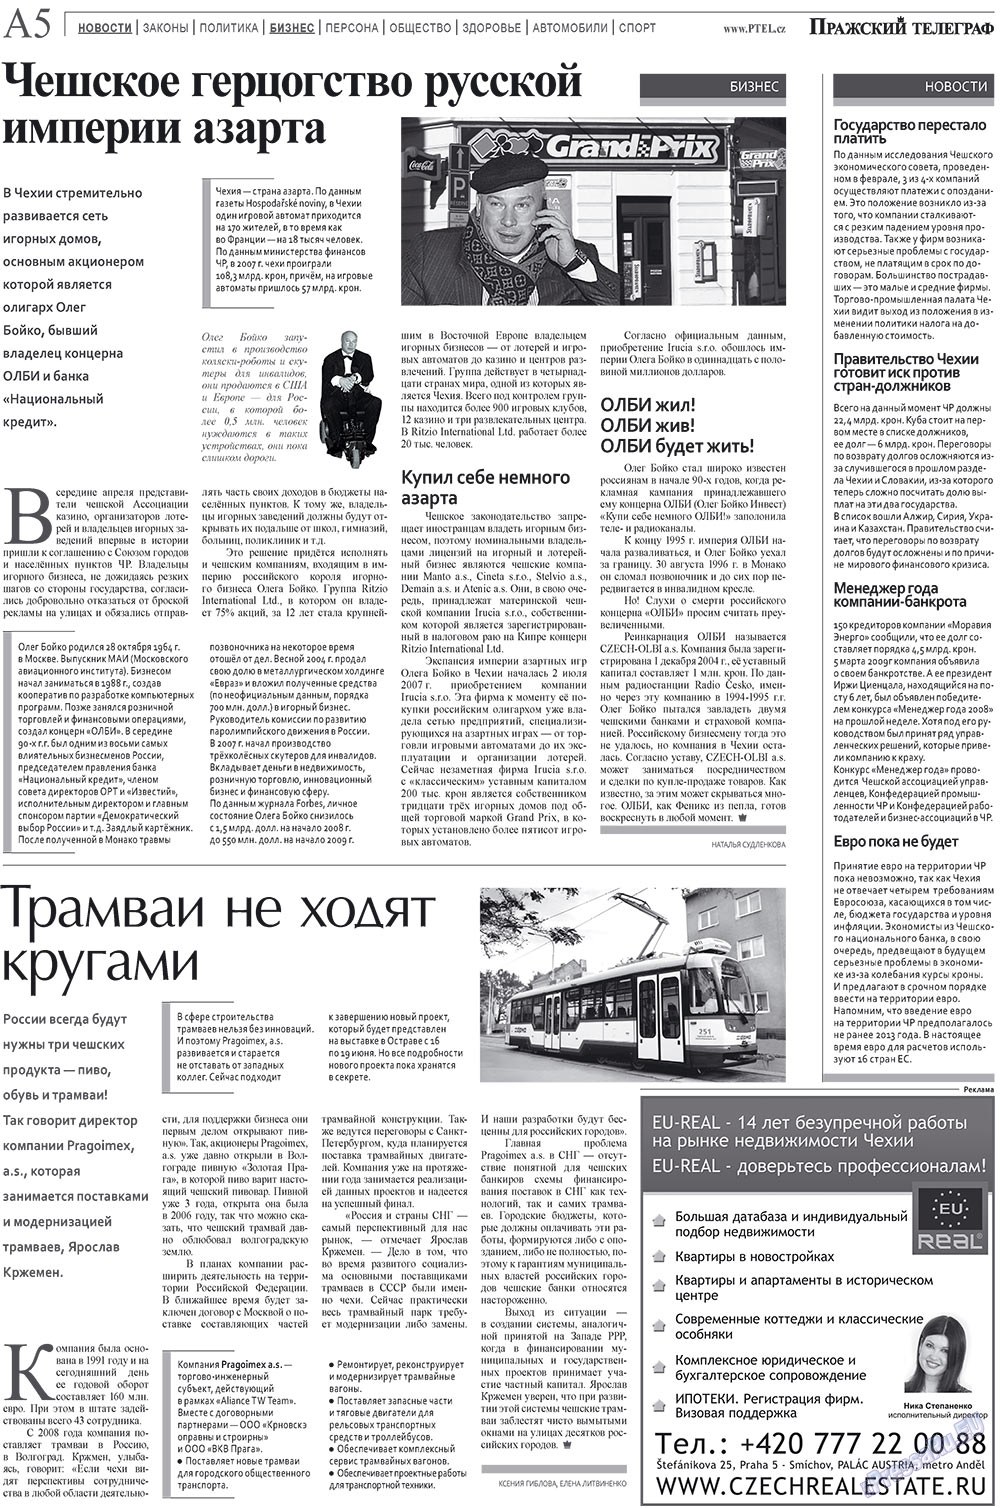 Пражский телеграф, газета. 2009 №2 стр.5